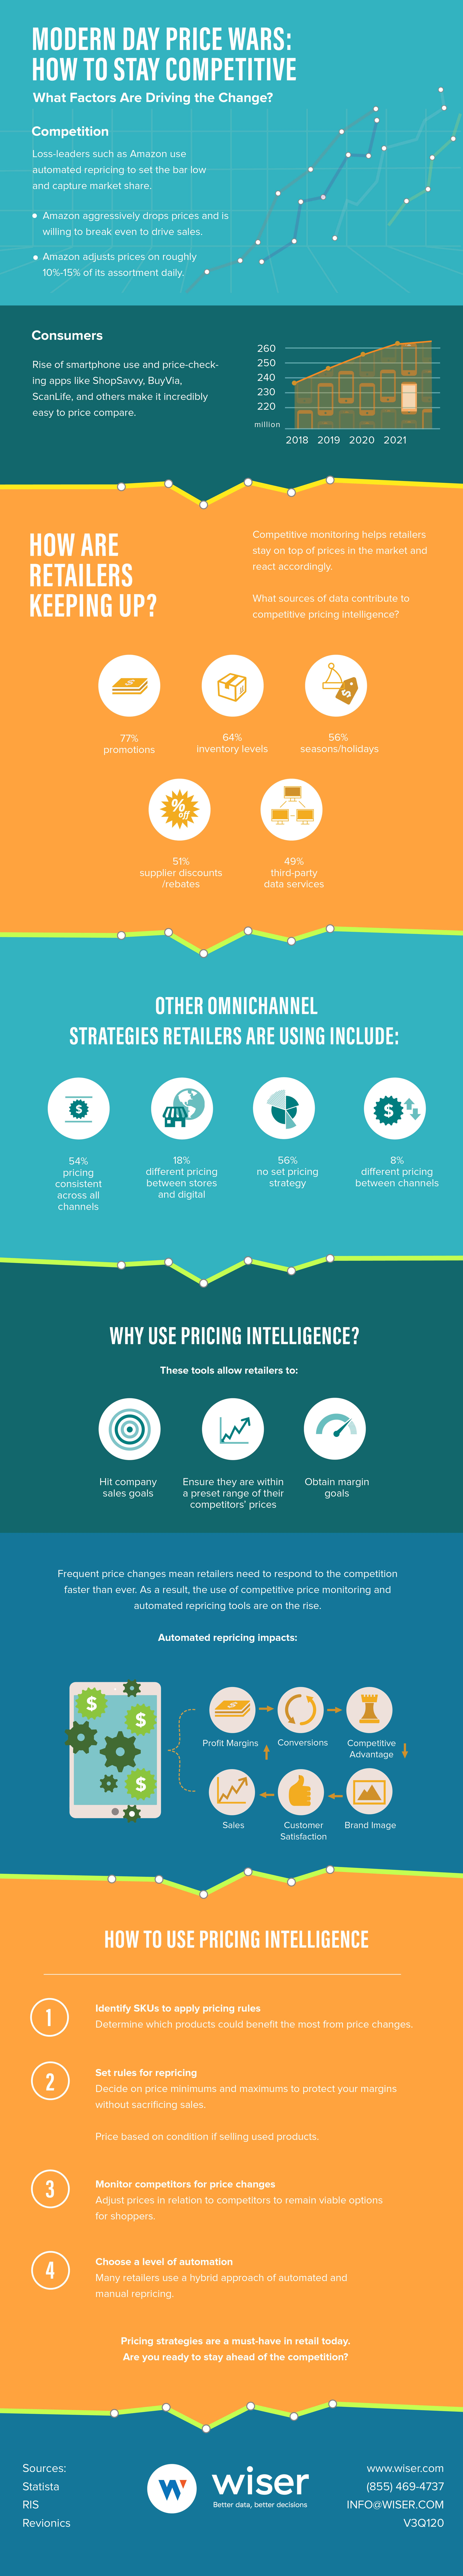 Price Wars Infographic